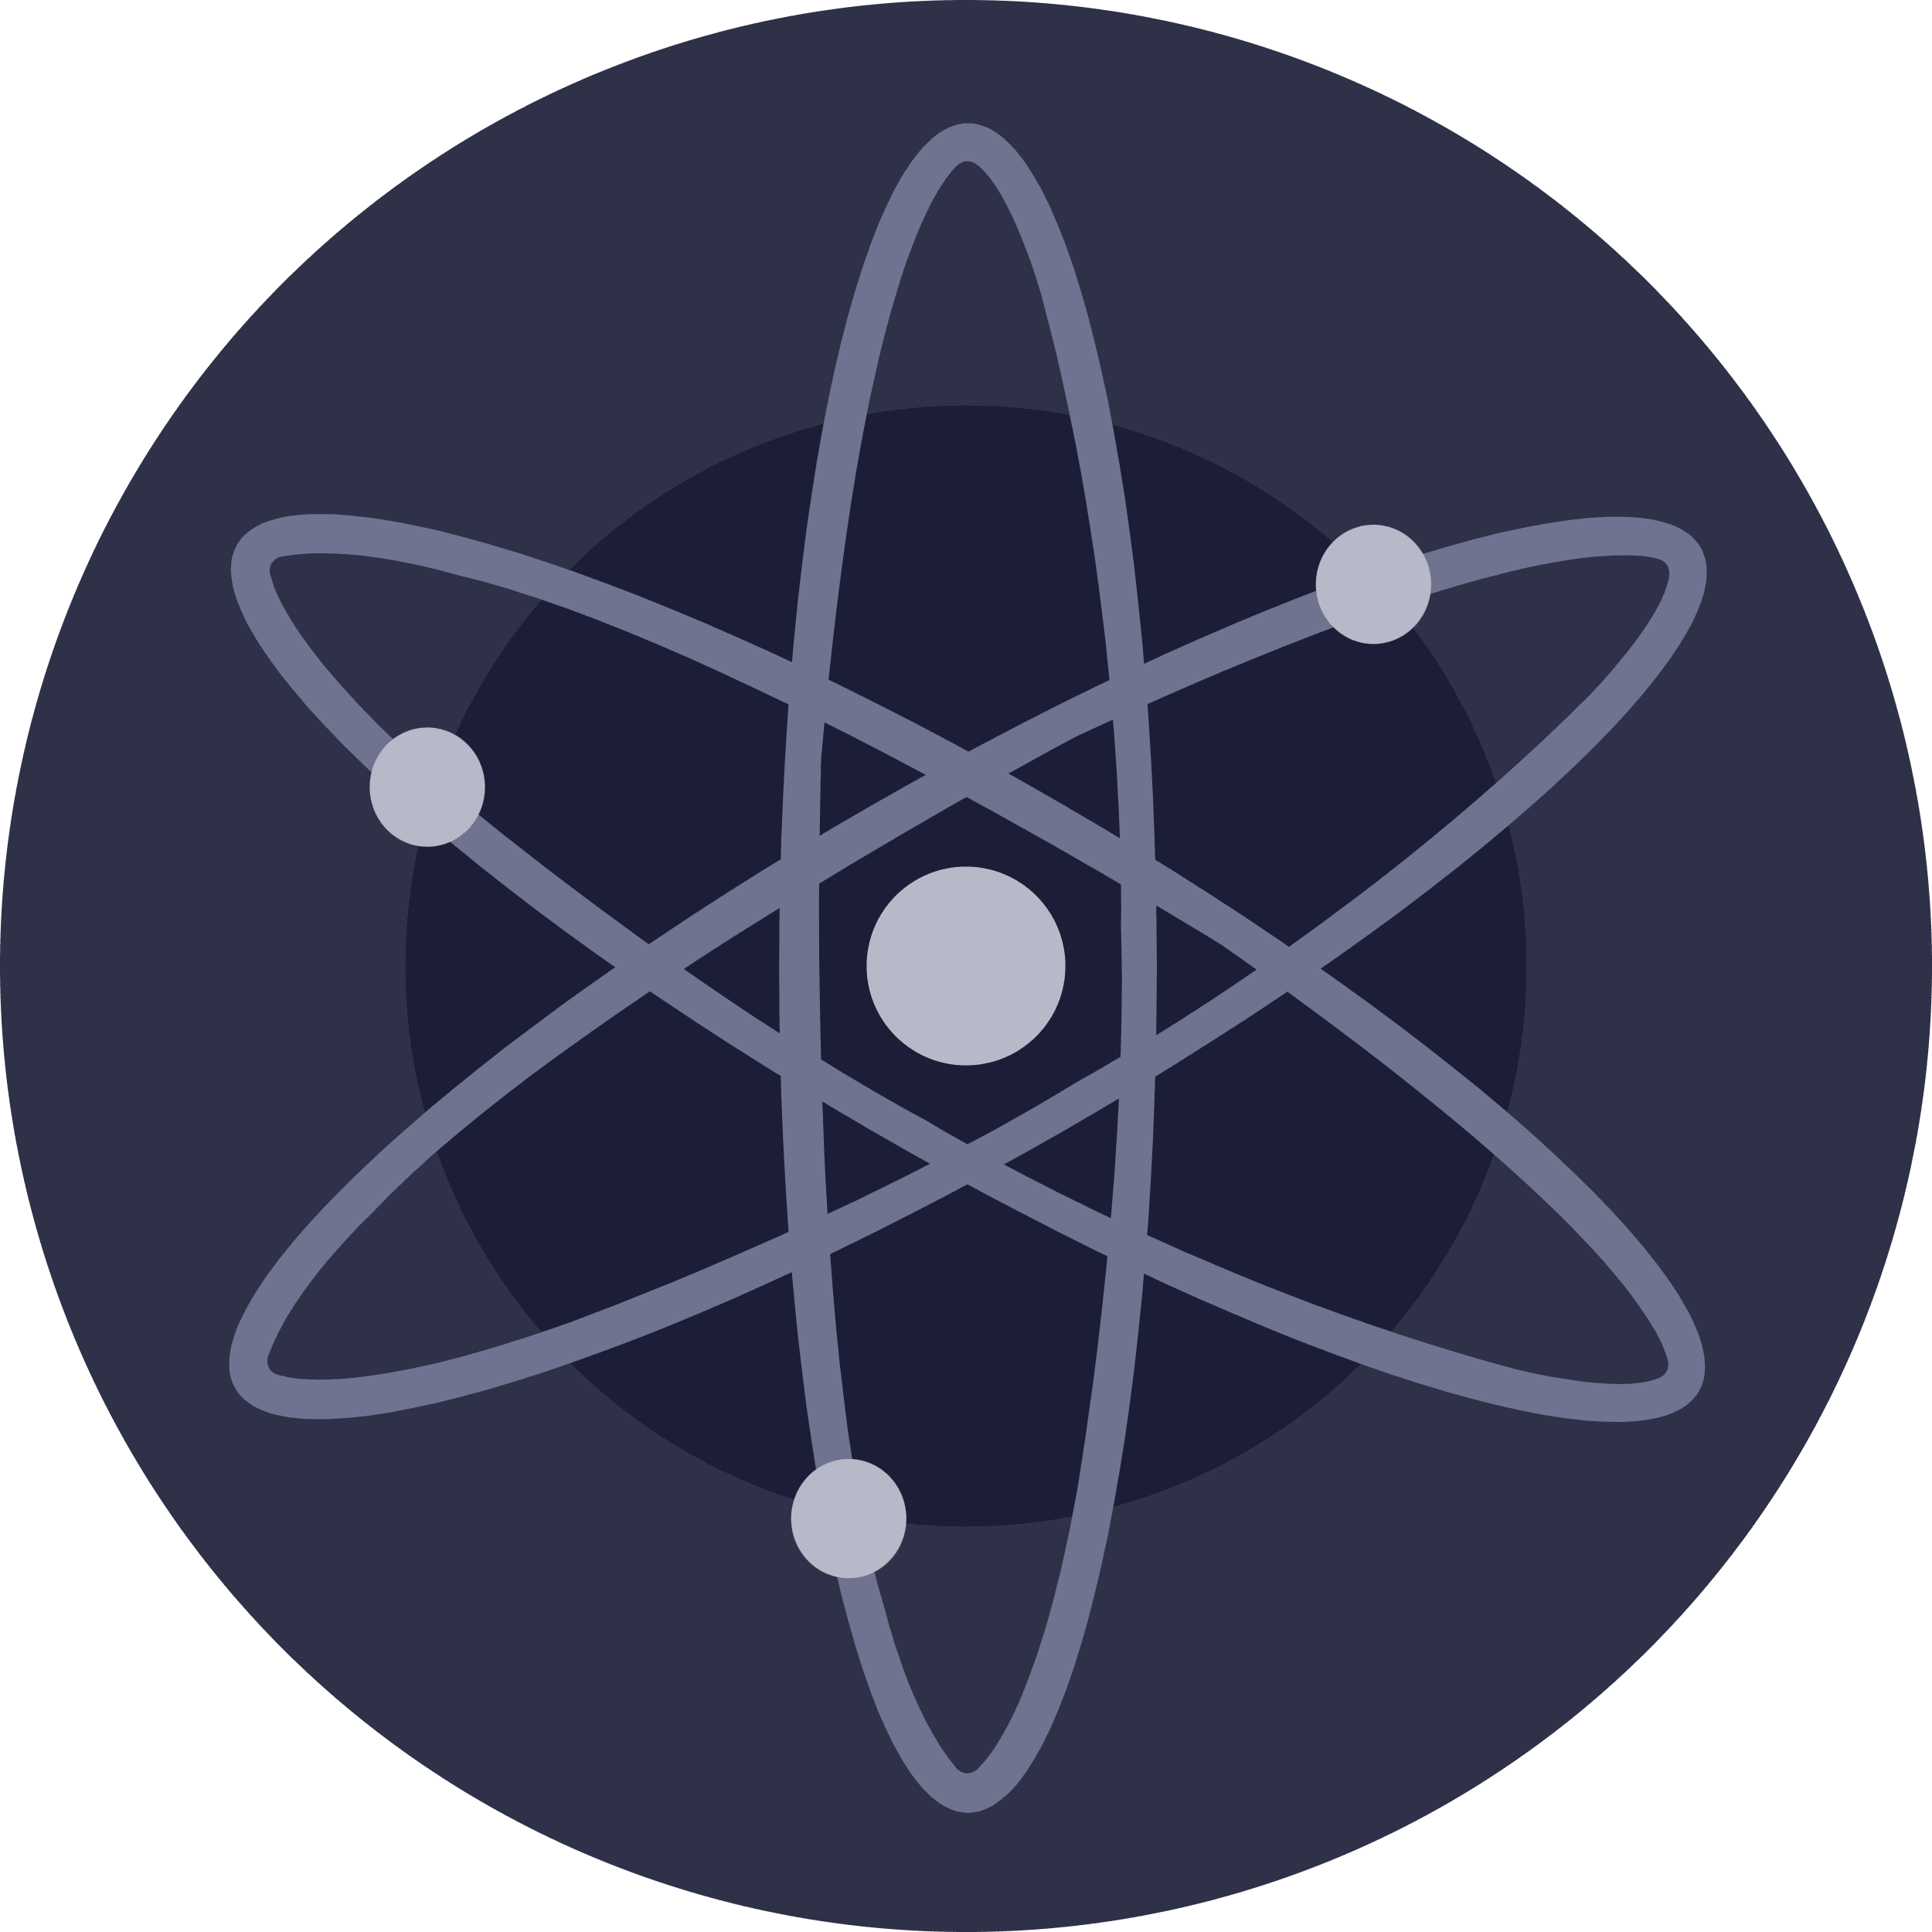 Cosmos logo in svg format